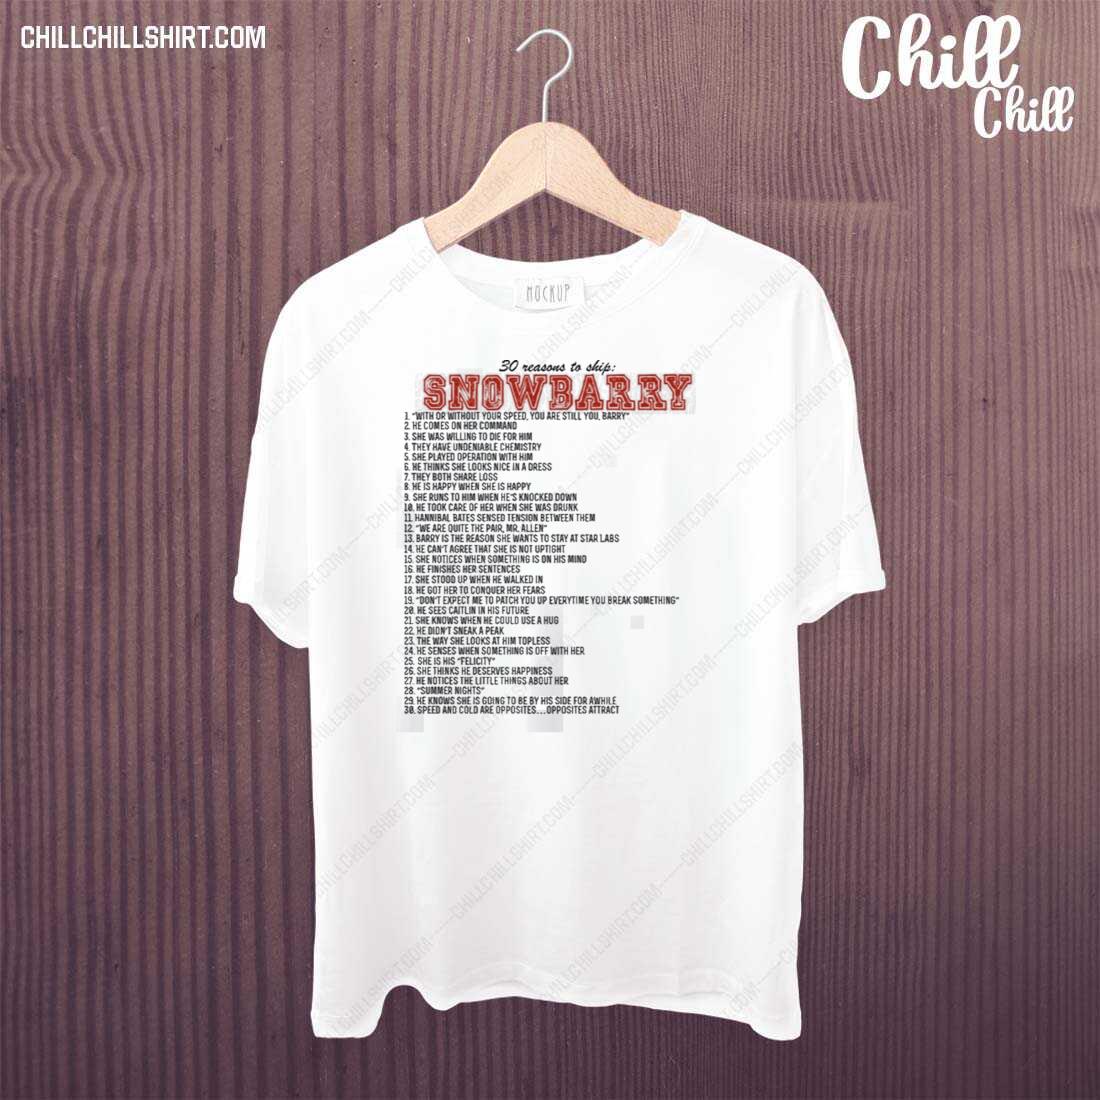 Nice 30 Reasons To Ship Snowbarry T-shirt